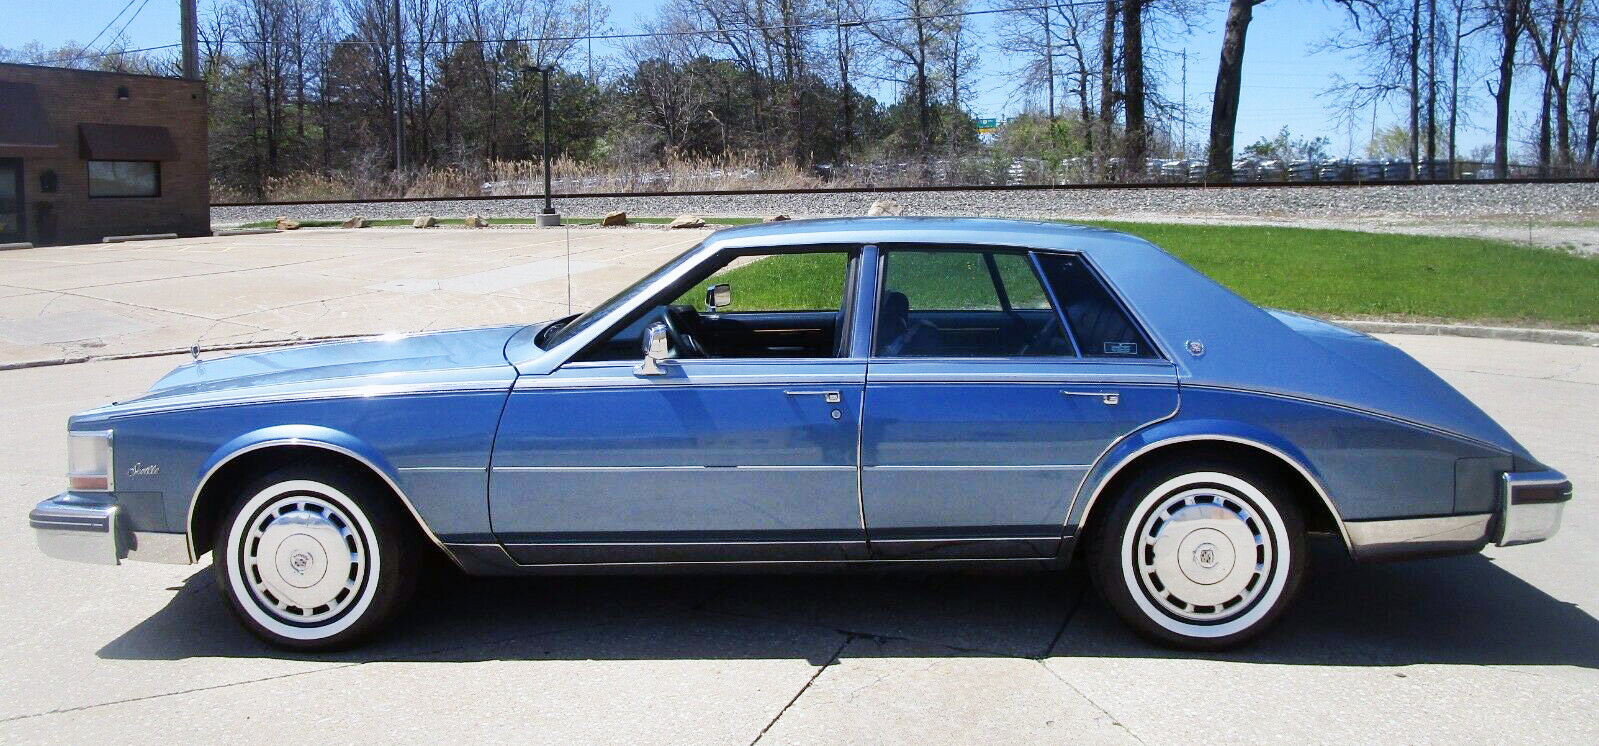 The '85 Second-Generation Cadillac Seville Bustleback - eBay Motors Blog